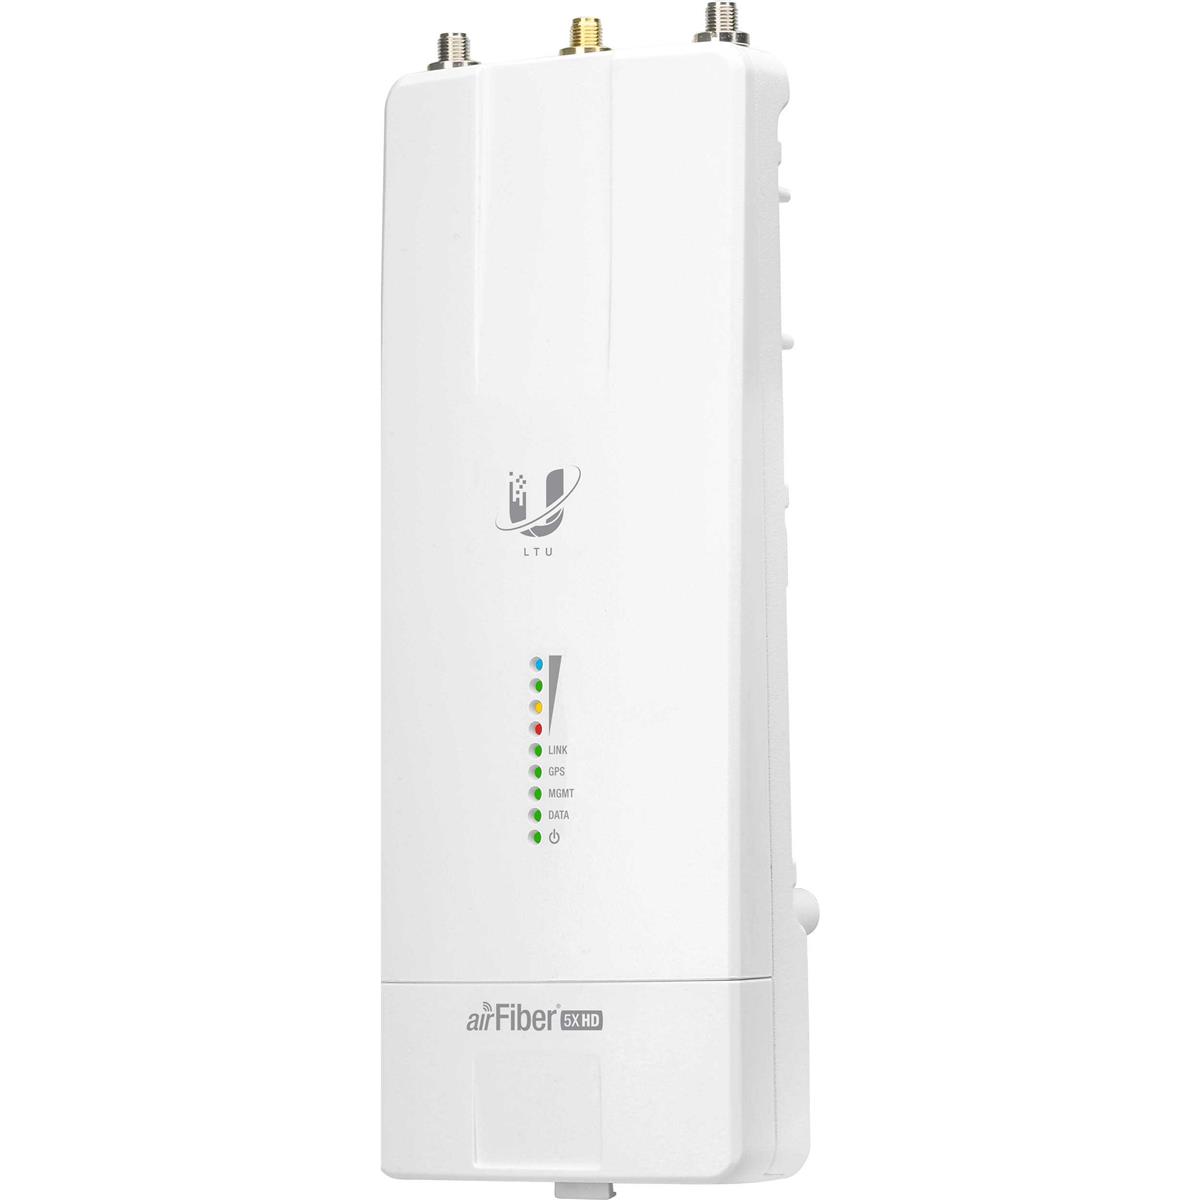 Image of Ubiquiti Networks airFiber 5XHD 5GHz Carrier Backhaul Radio with LTU Technology